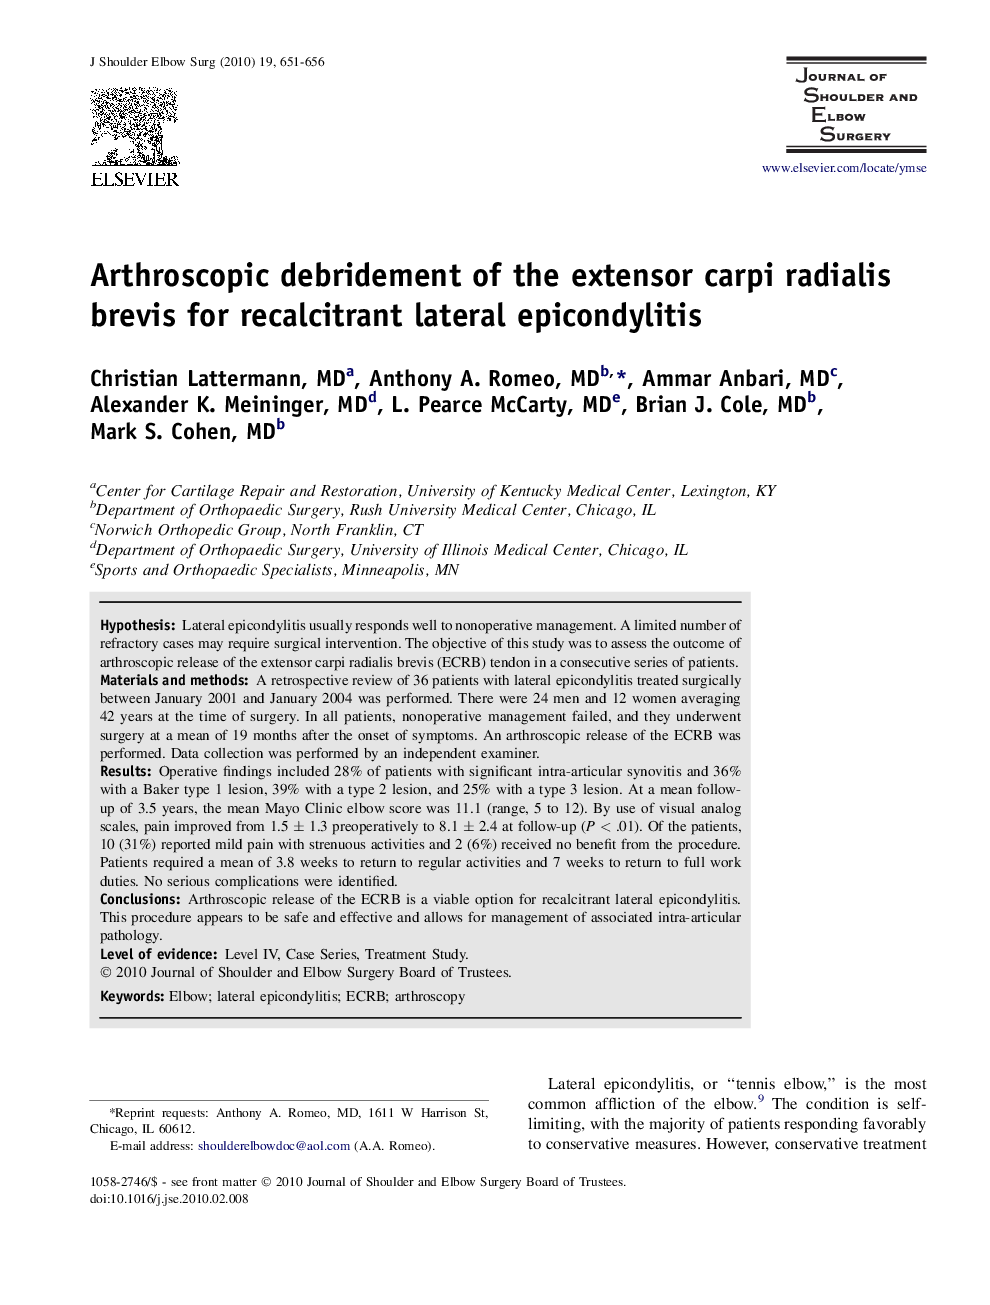 Arthroscopic debridement of the extensor carpi radialis brevis for recalcitrant lateral epicondylitis